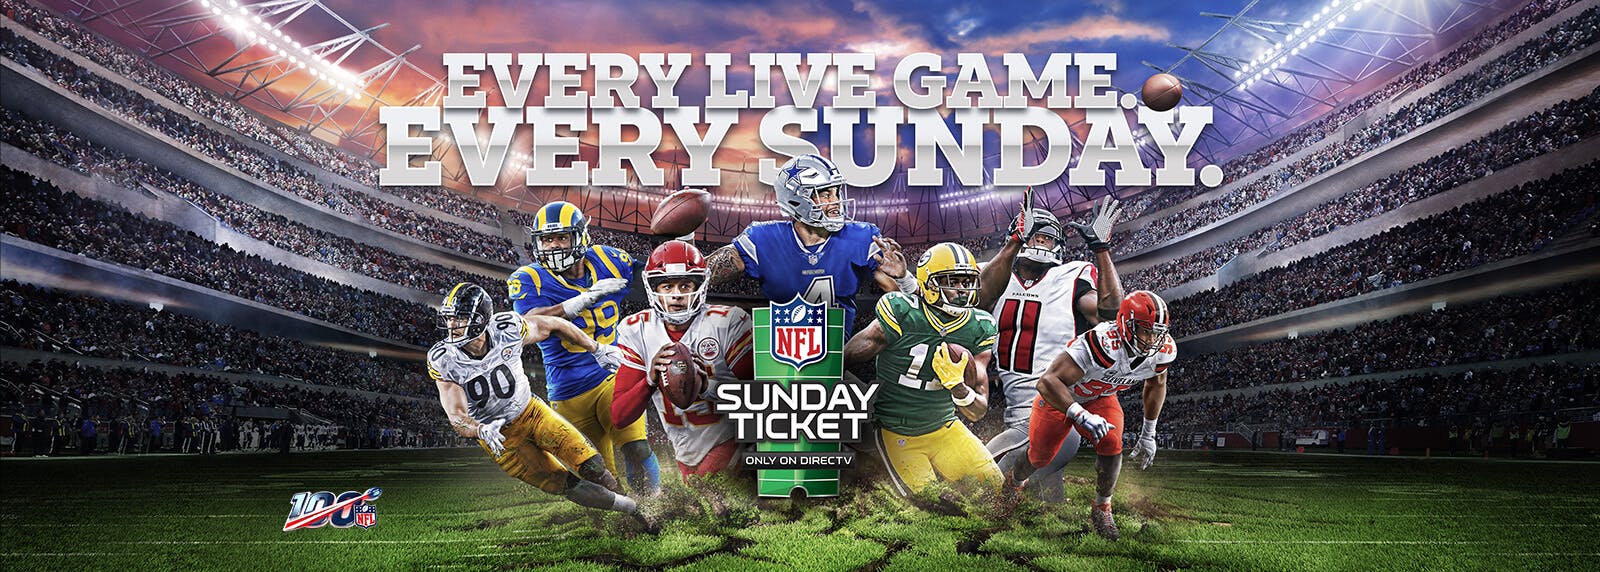 giants vikings NFL Sunday Ticket streaming nfc